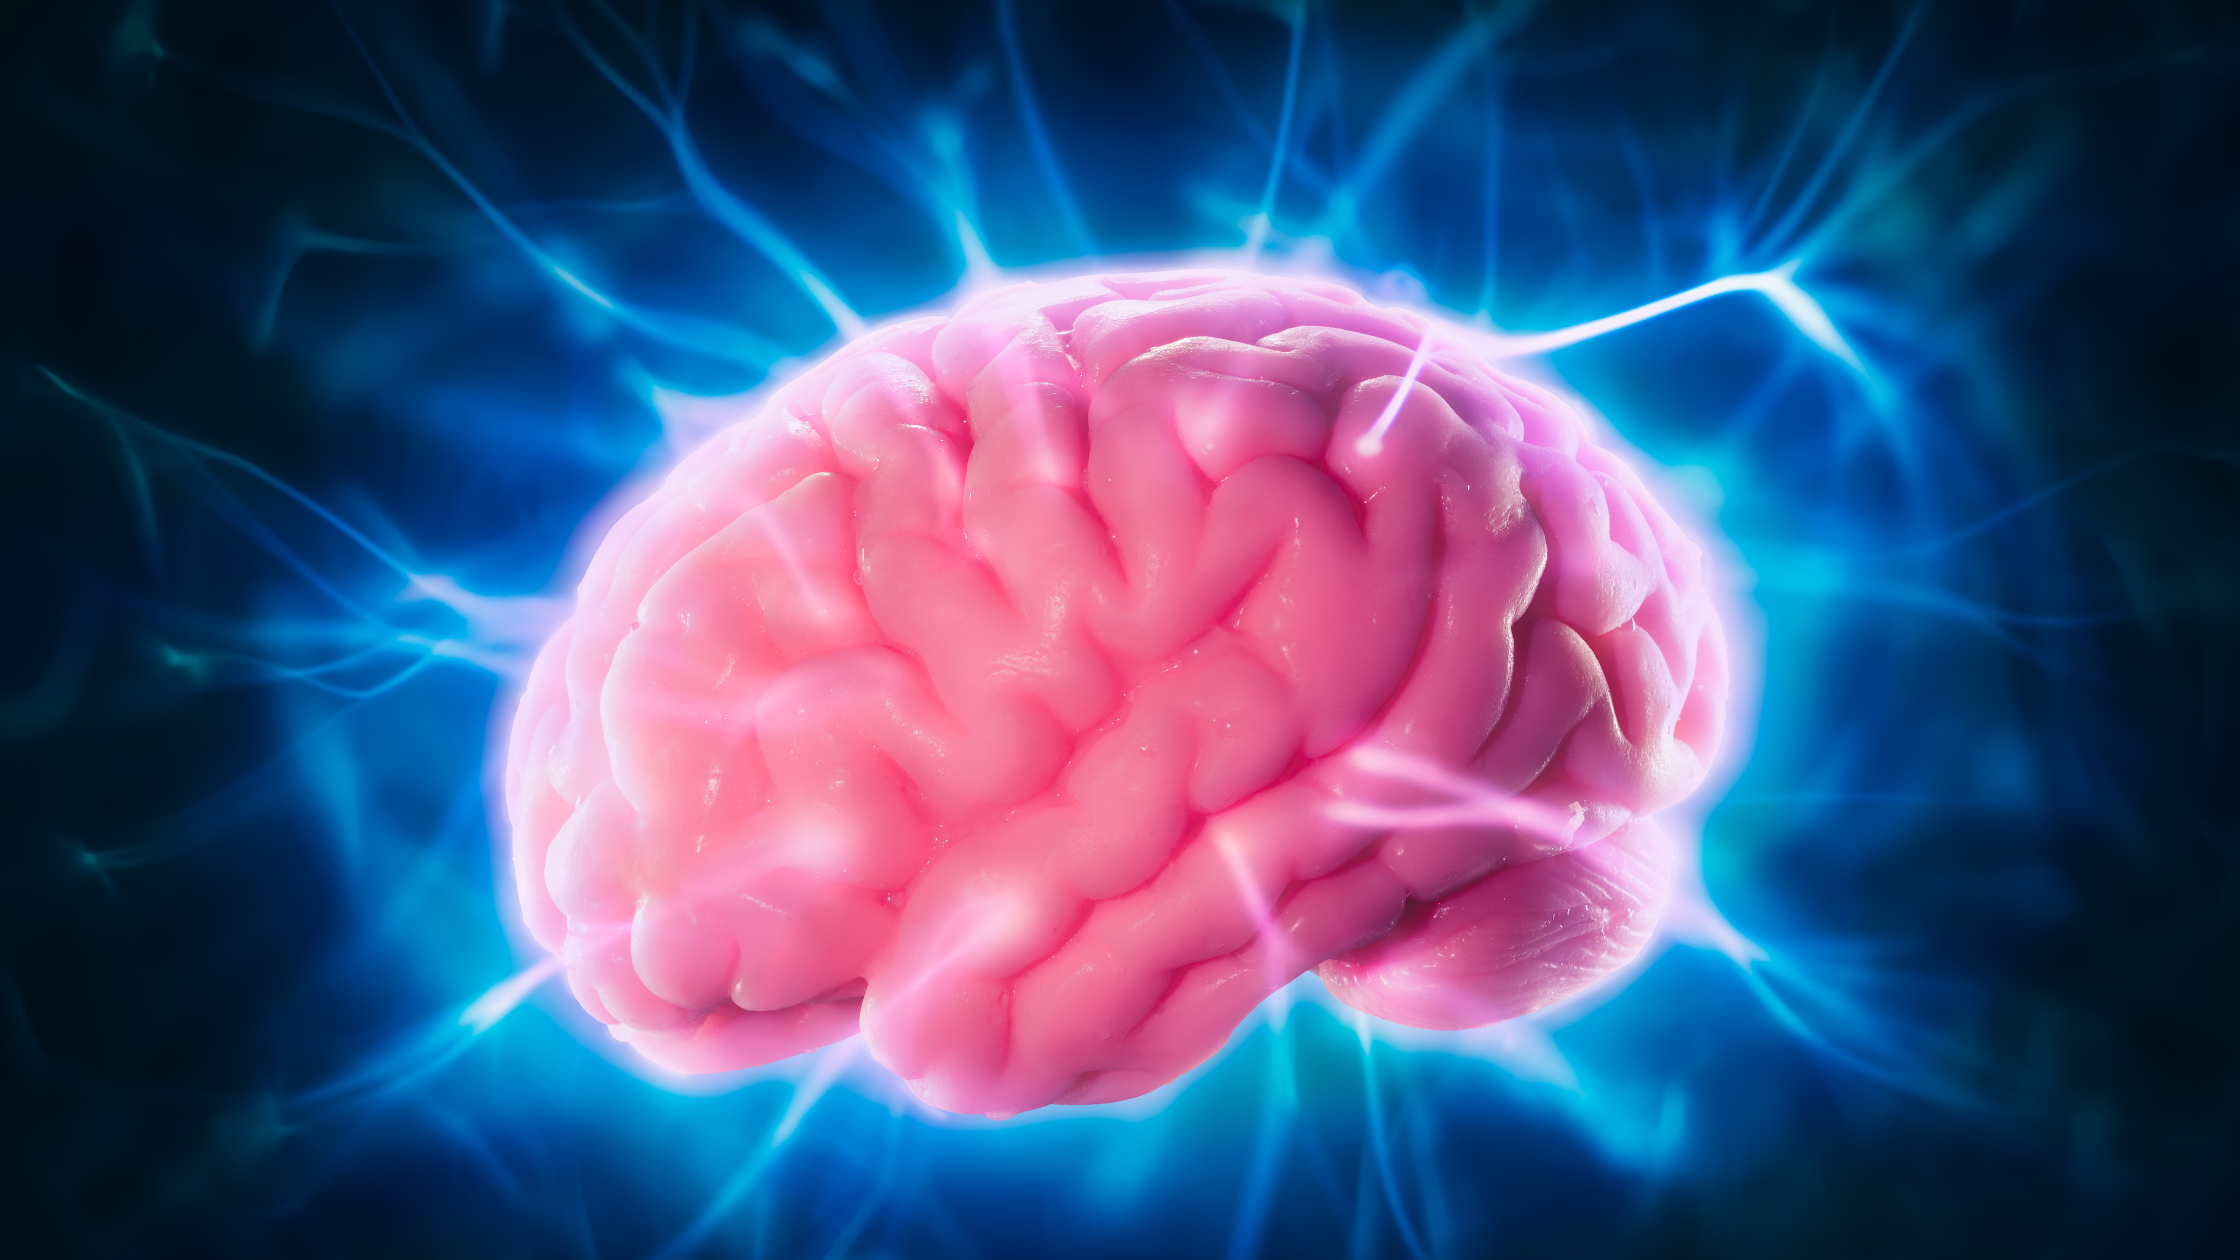 glowing human brain on a dark blue background